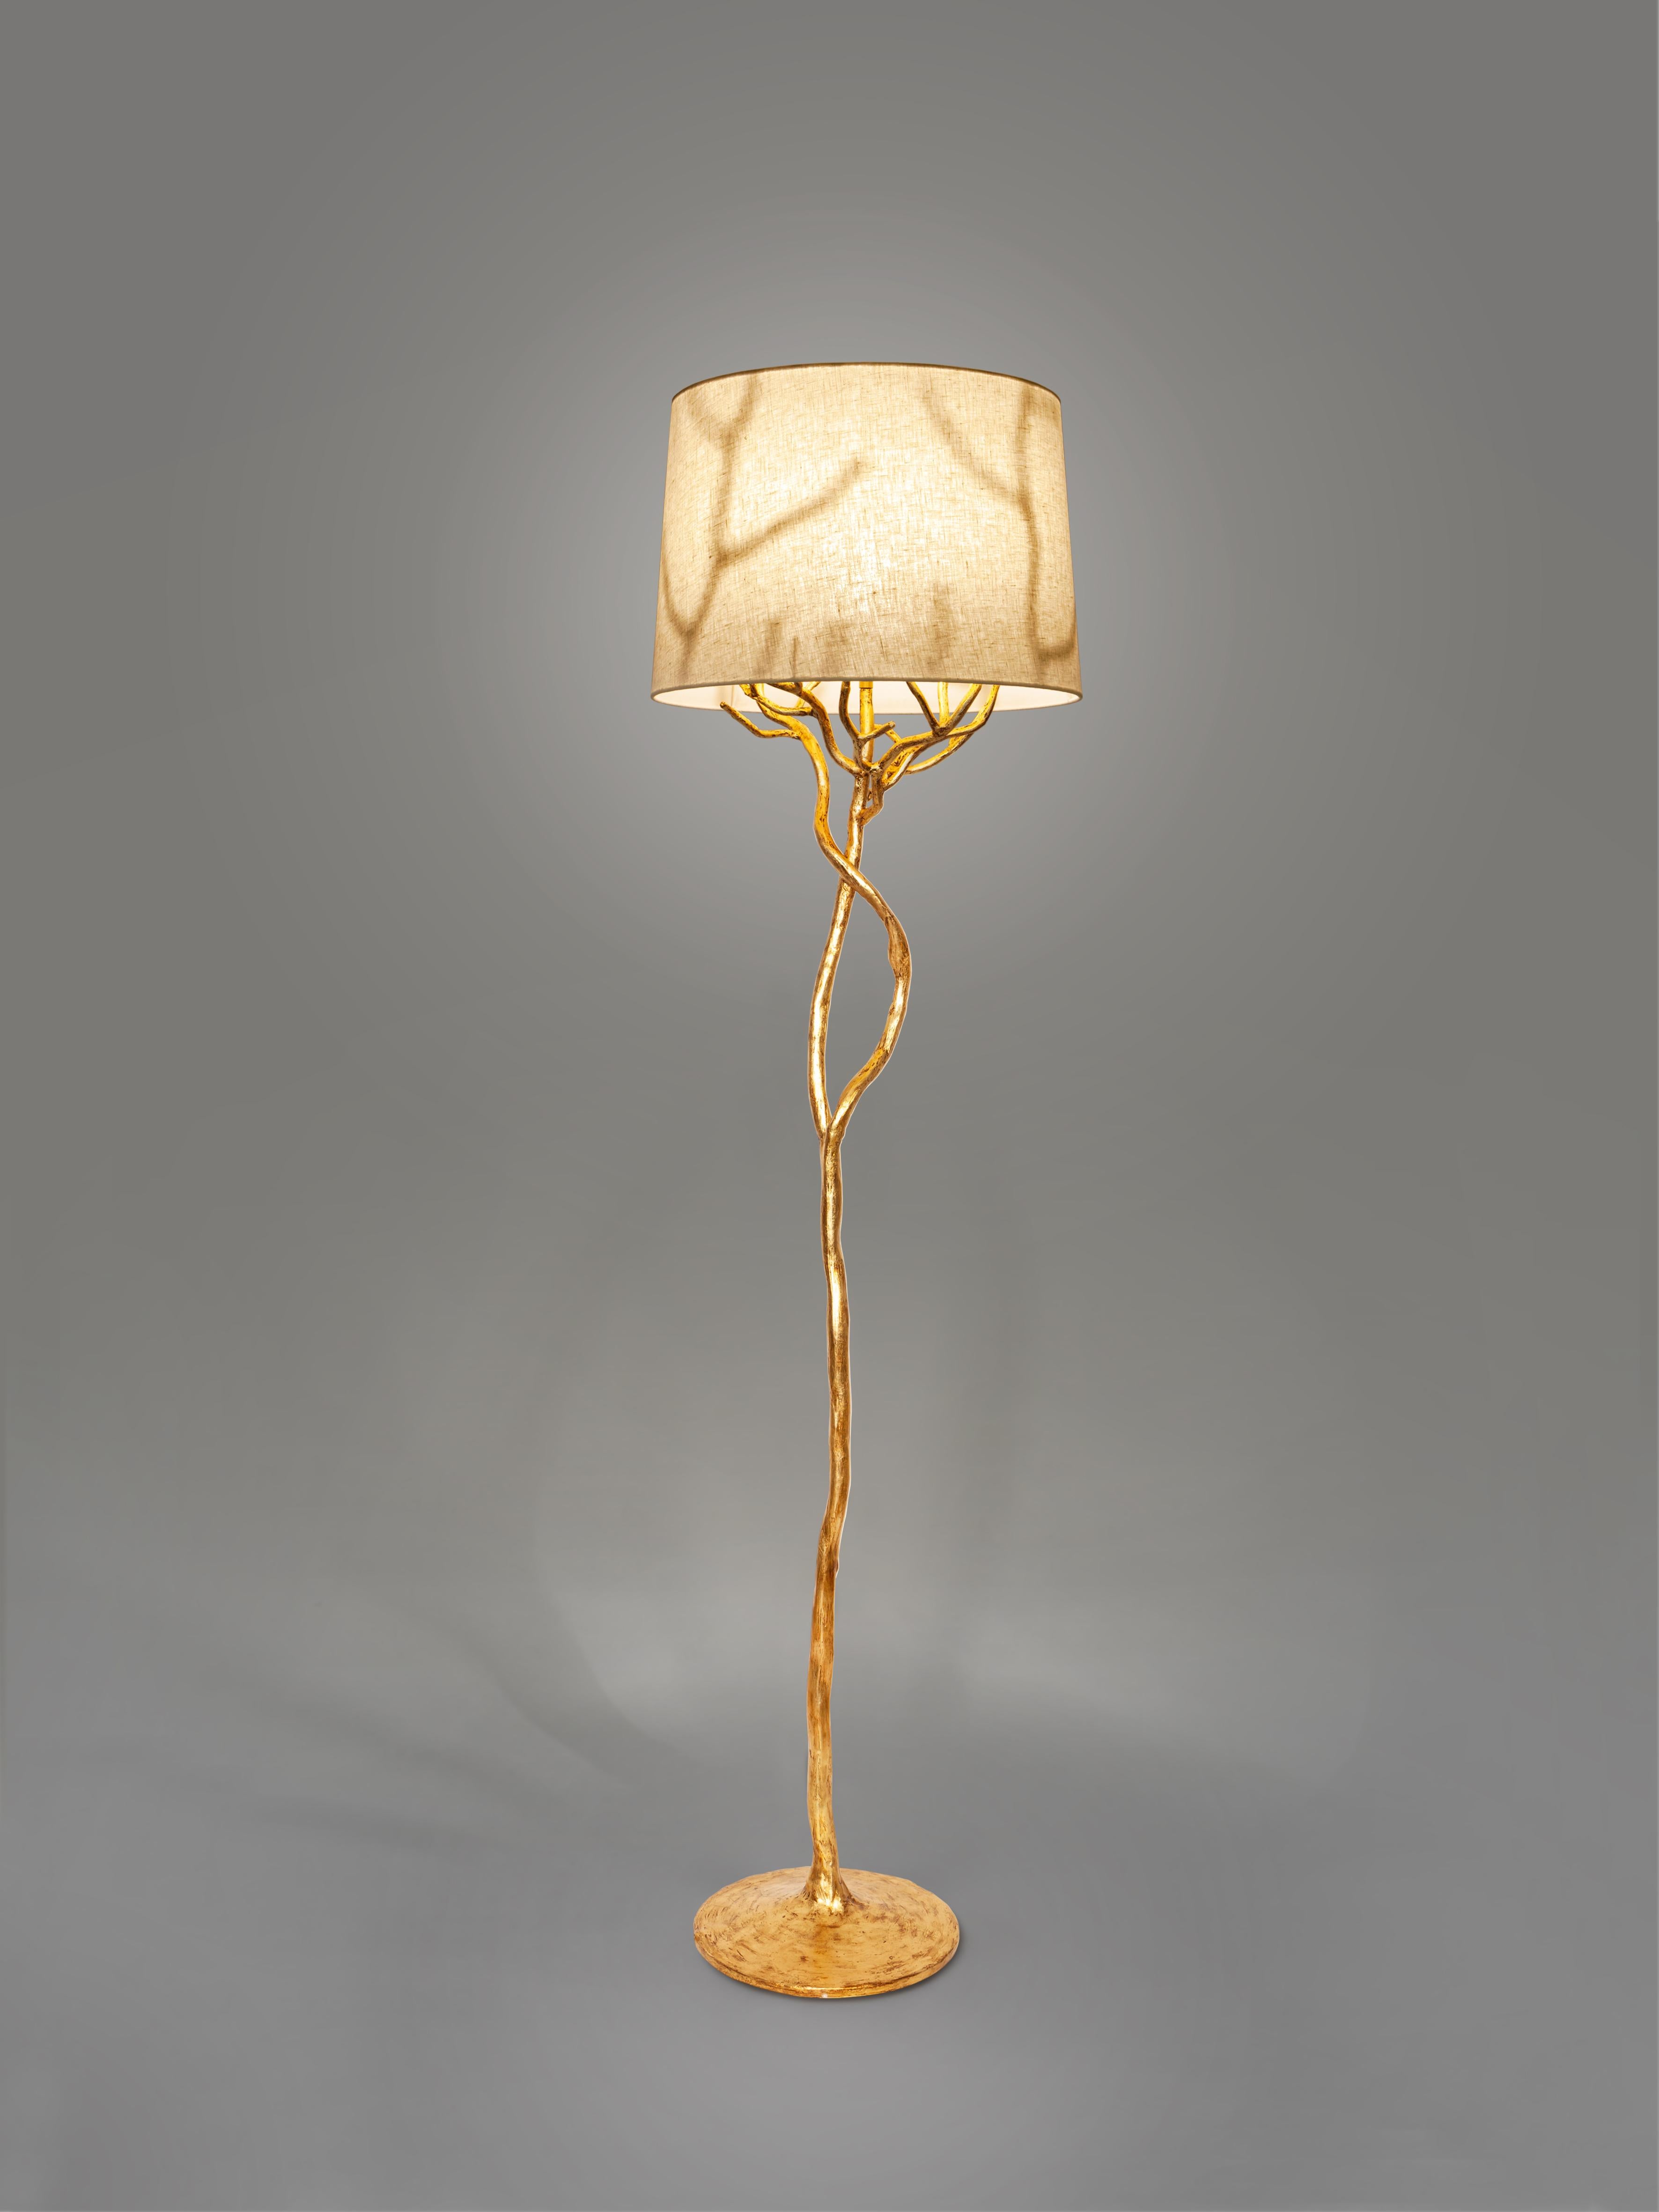 German Organic Floor Lamp “Etna” in Antique Gold Finish, Benediko For Sale